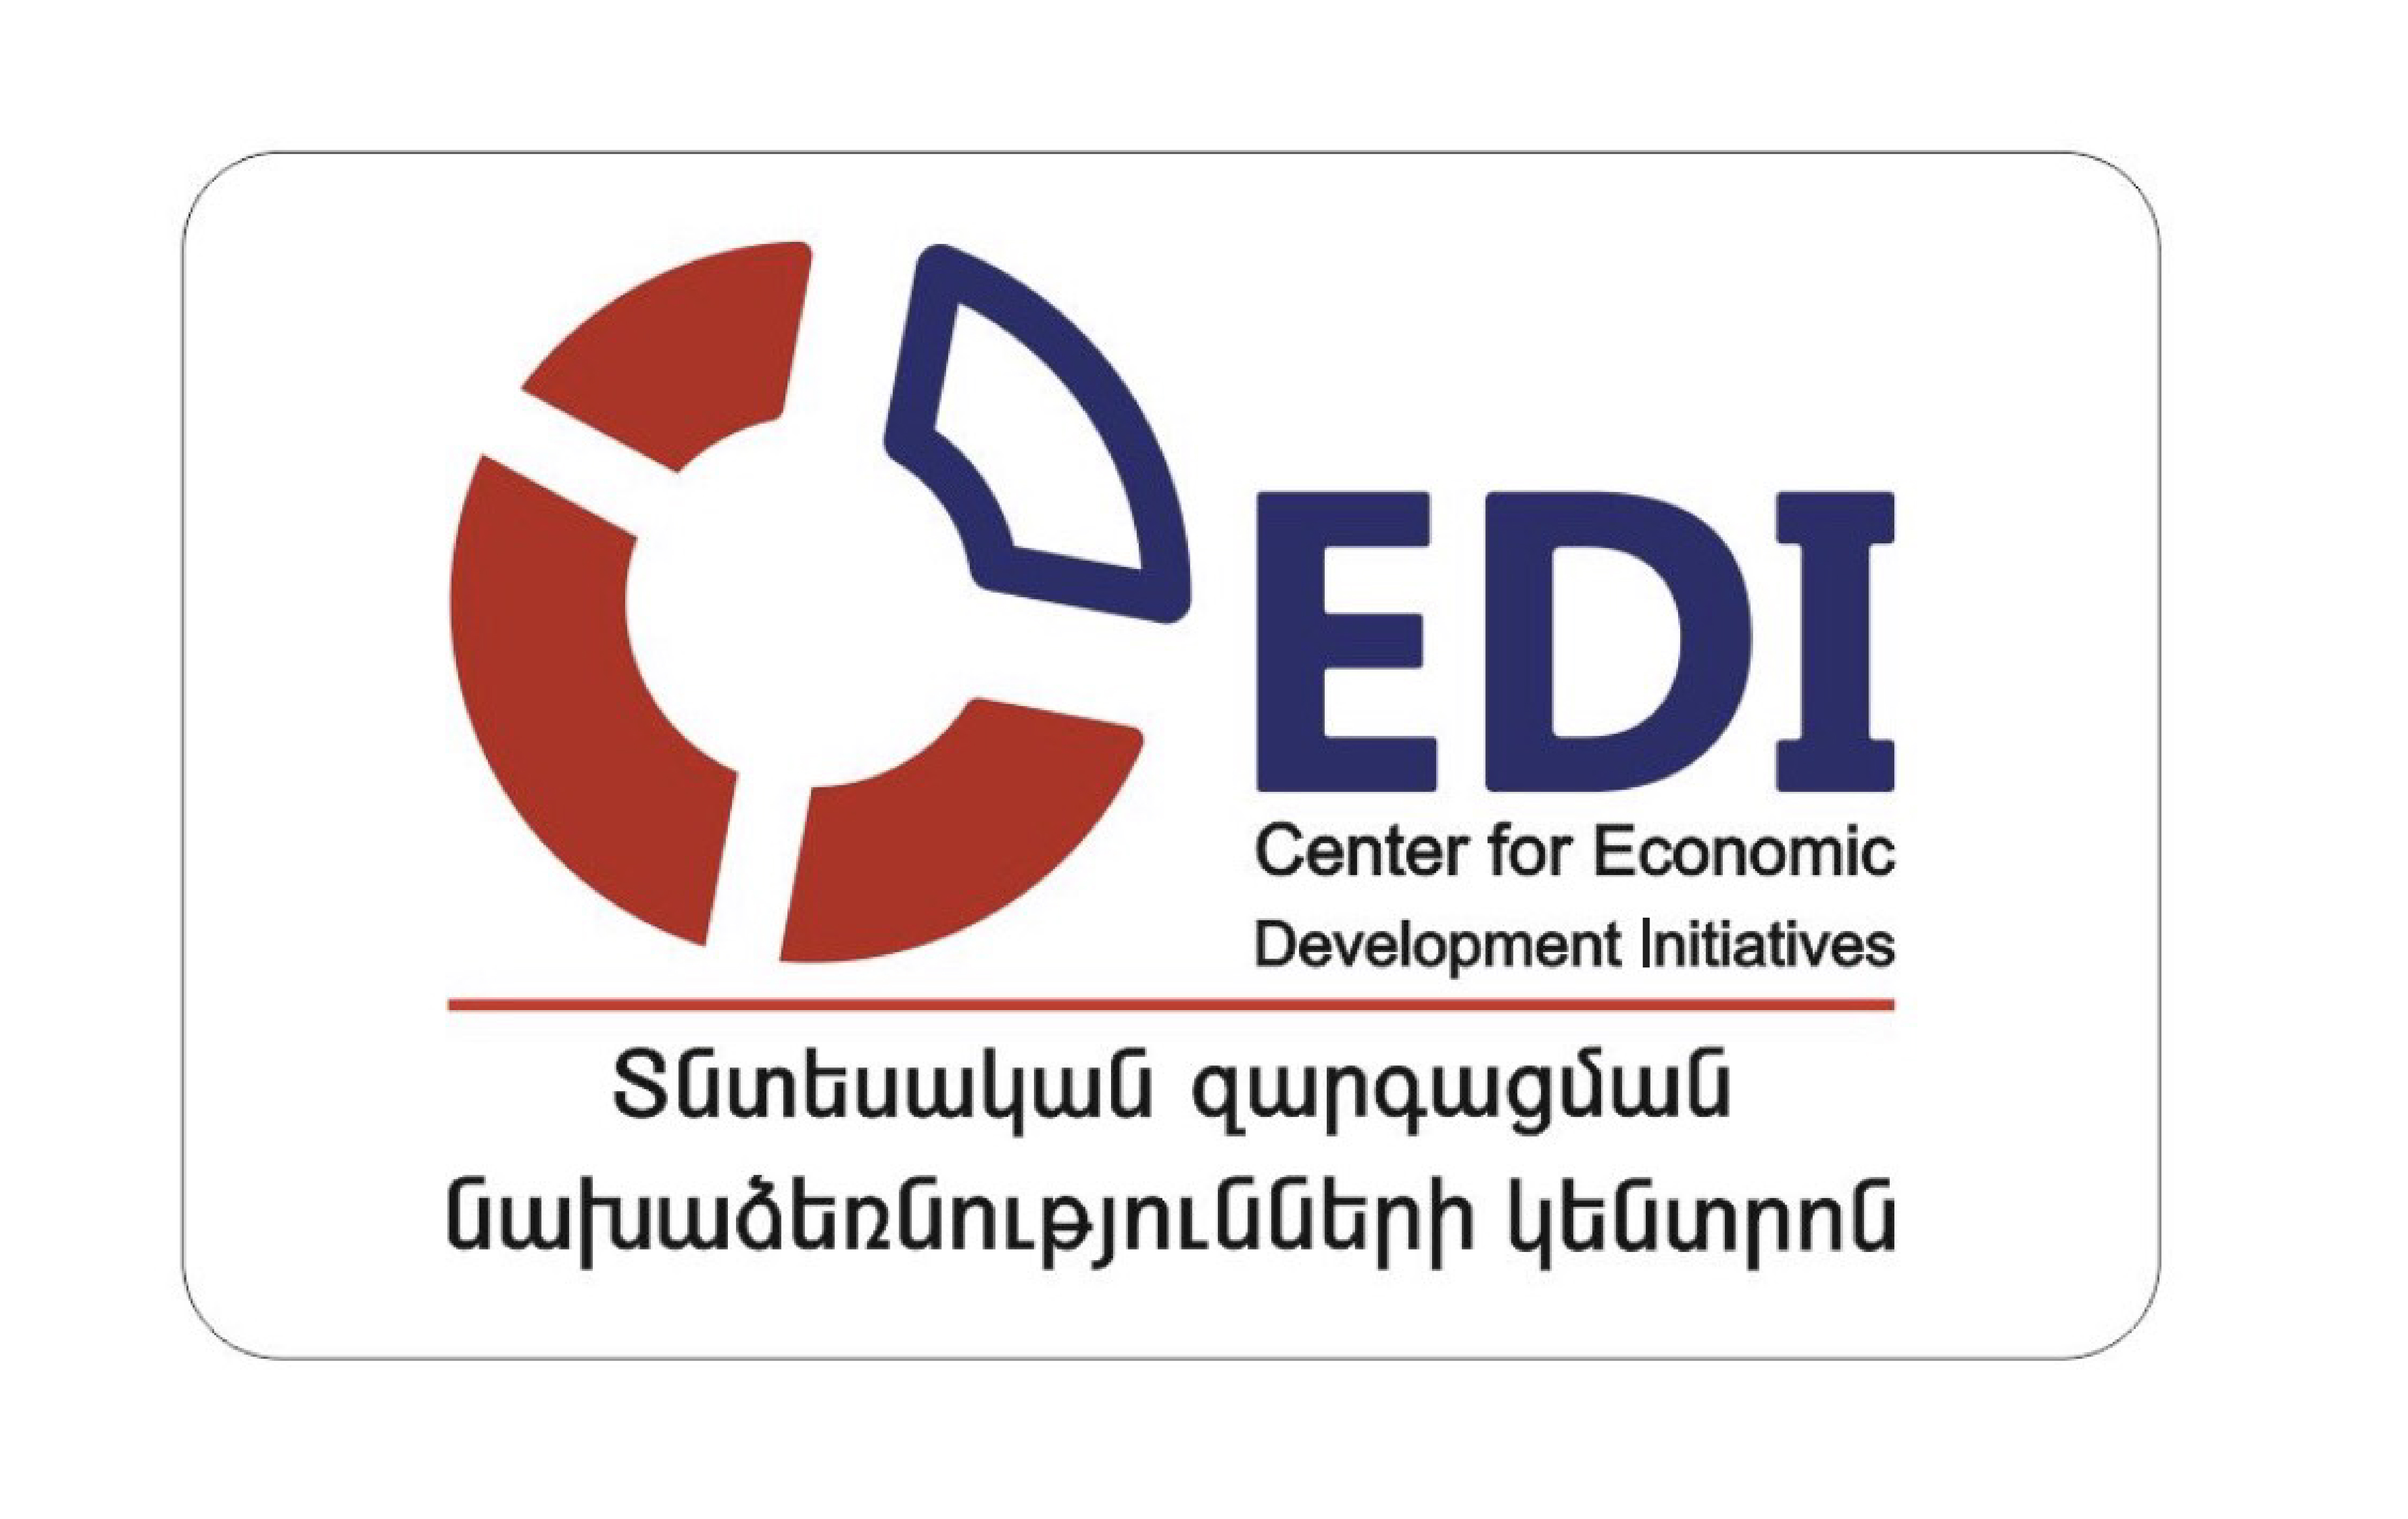 Center for Economic Development Initiatives Տեղական ՀԿ